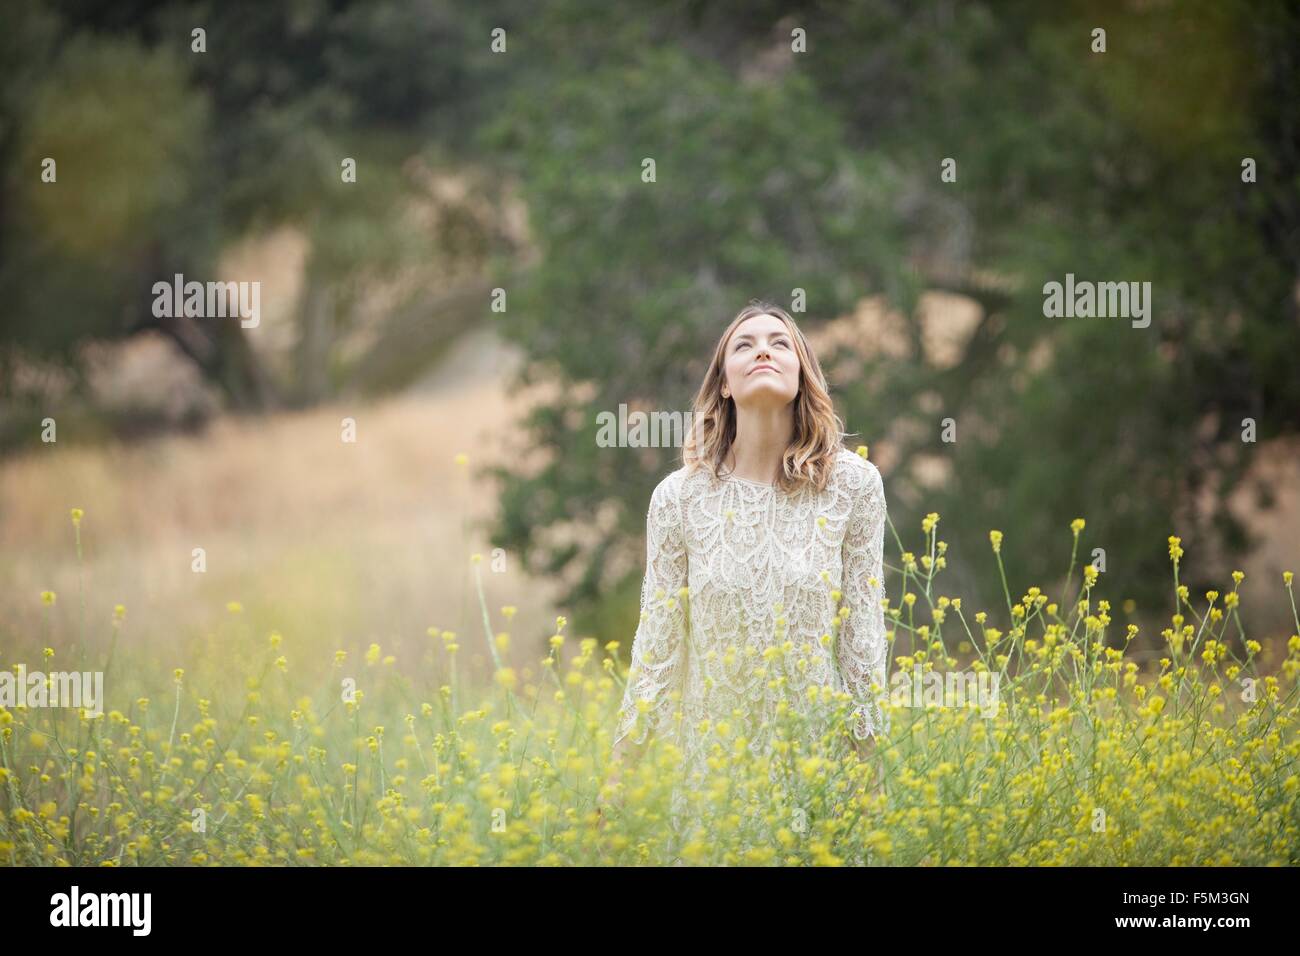 Woman enjoying fresh air in park, Stoney Point, Topanga Canyon, Chatsworth, Los Angeles, California, USA Stock Photo